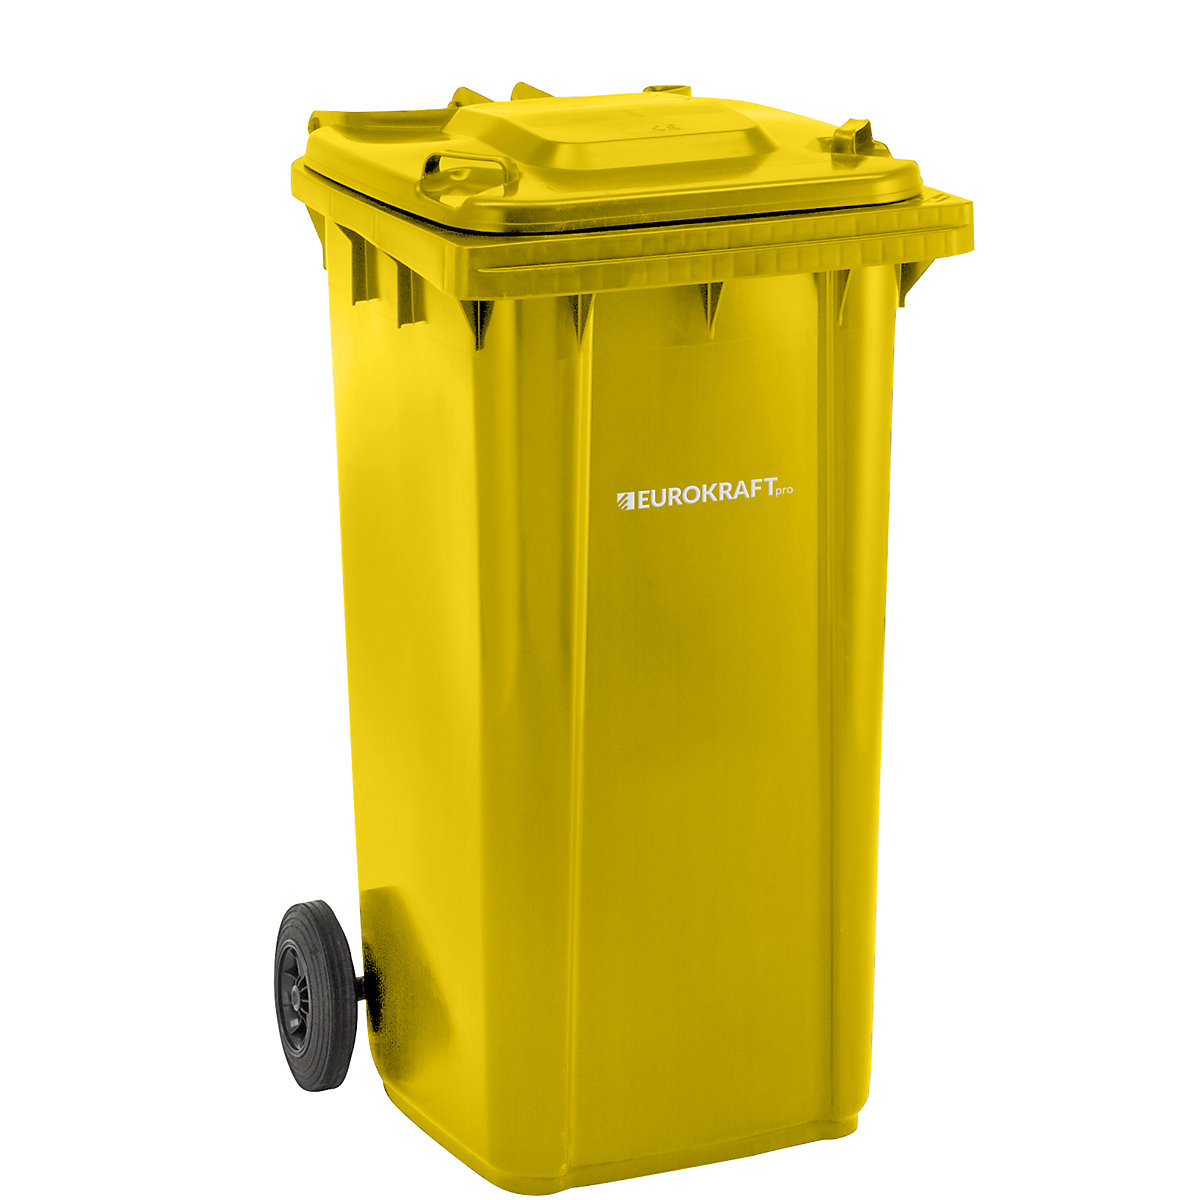 EUROKRAFTpro – Pubelă de gunoi din plastic, DIN EN 840, volum 240 l, lăț. x î. x ad. 580 x 1100 x 740 mm, galben, minimum 5 buc.